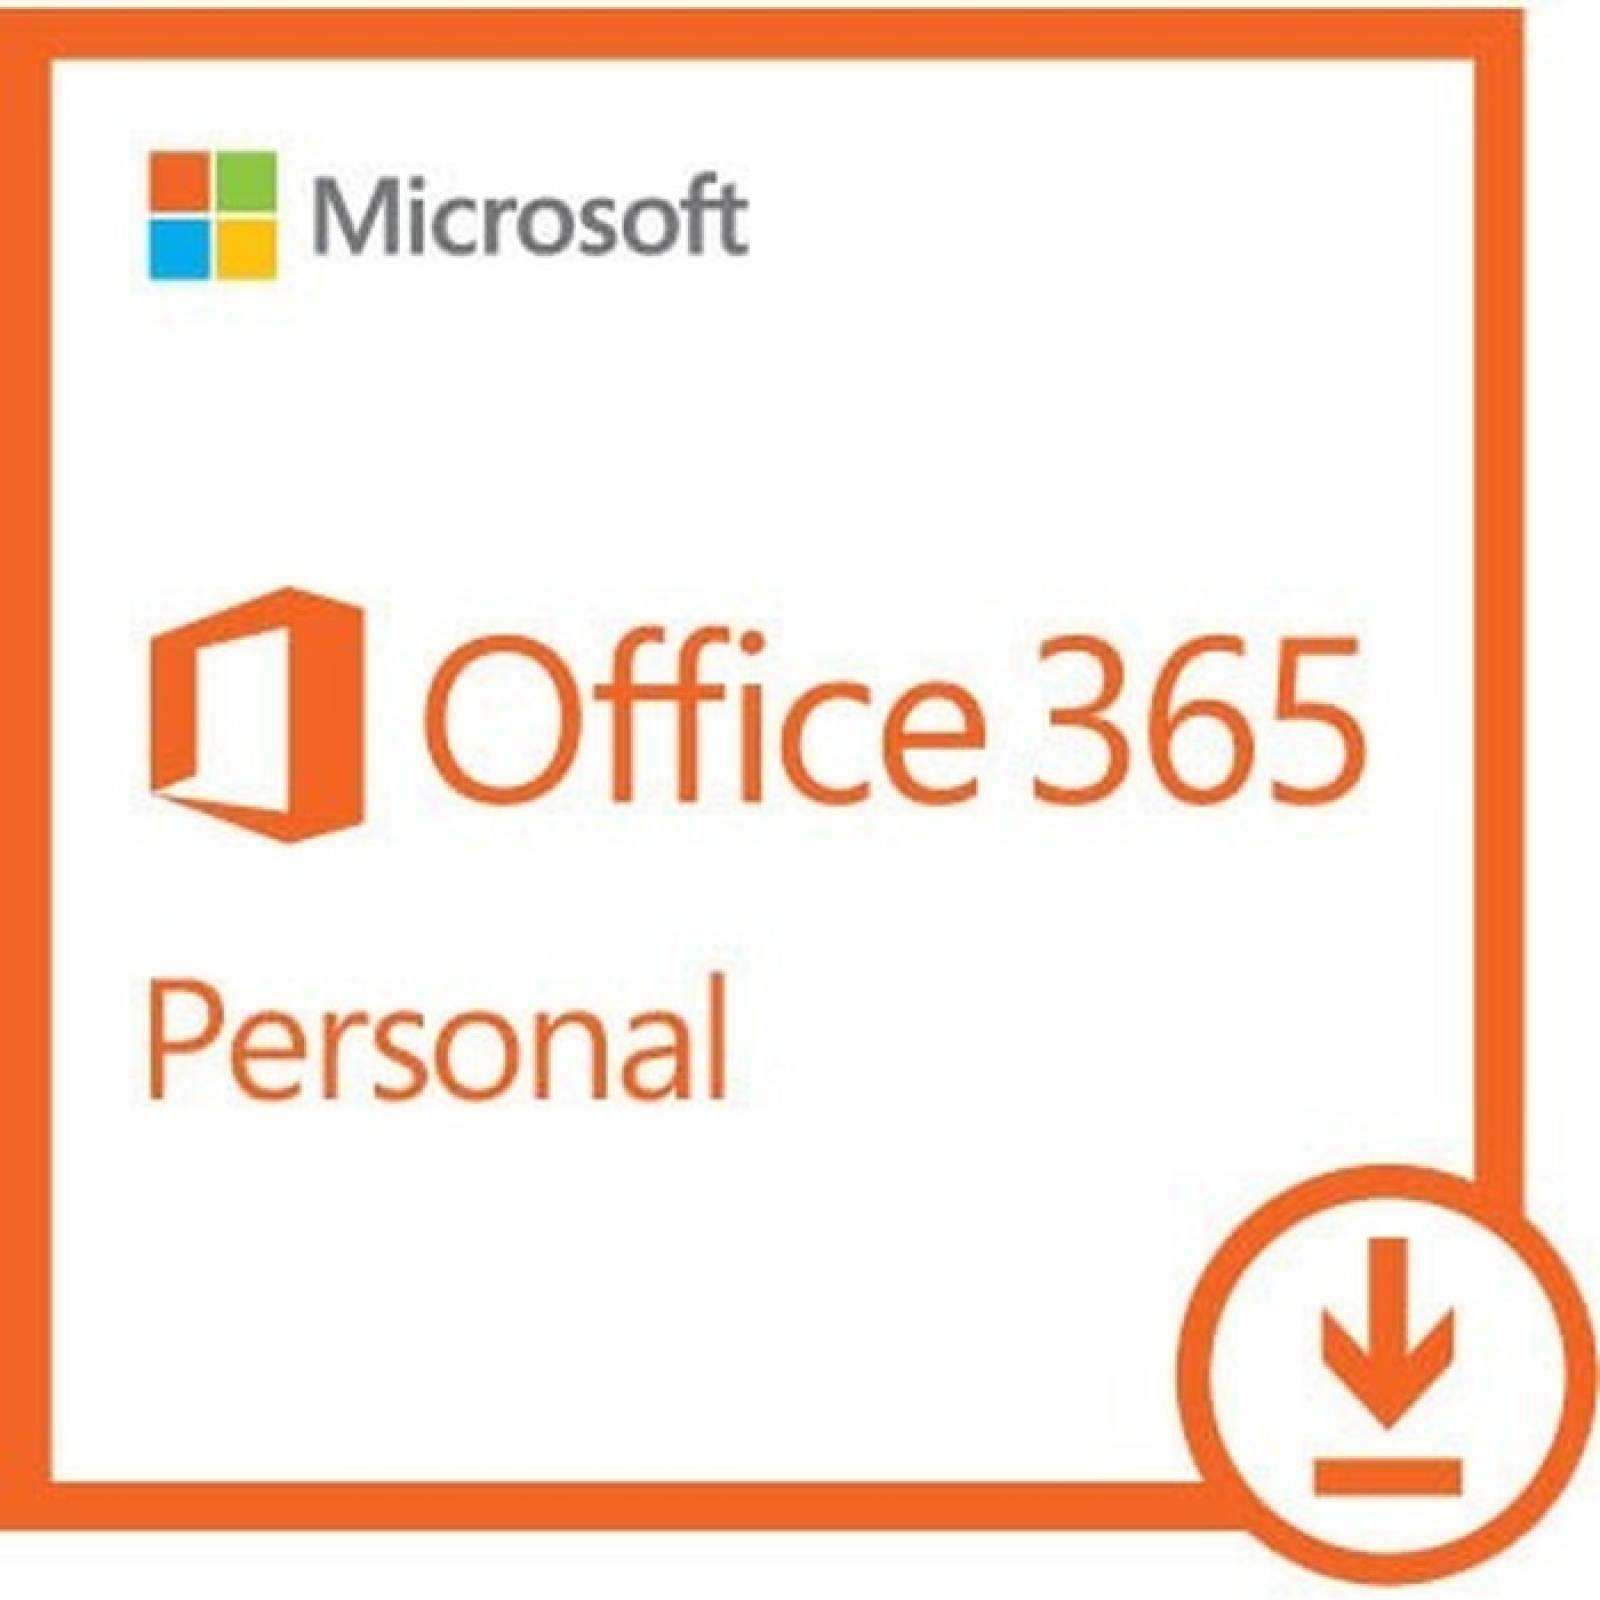 Microsoft Office 365 Personal 3264bit  Licencia de suscripcin  1 PC  Mac 1 telfono 1 tableta  1 ao